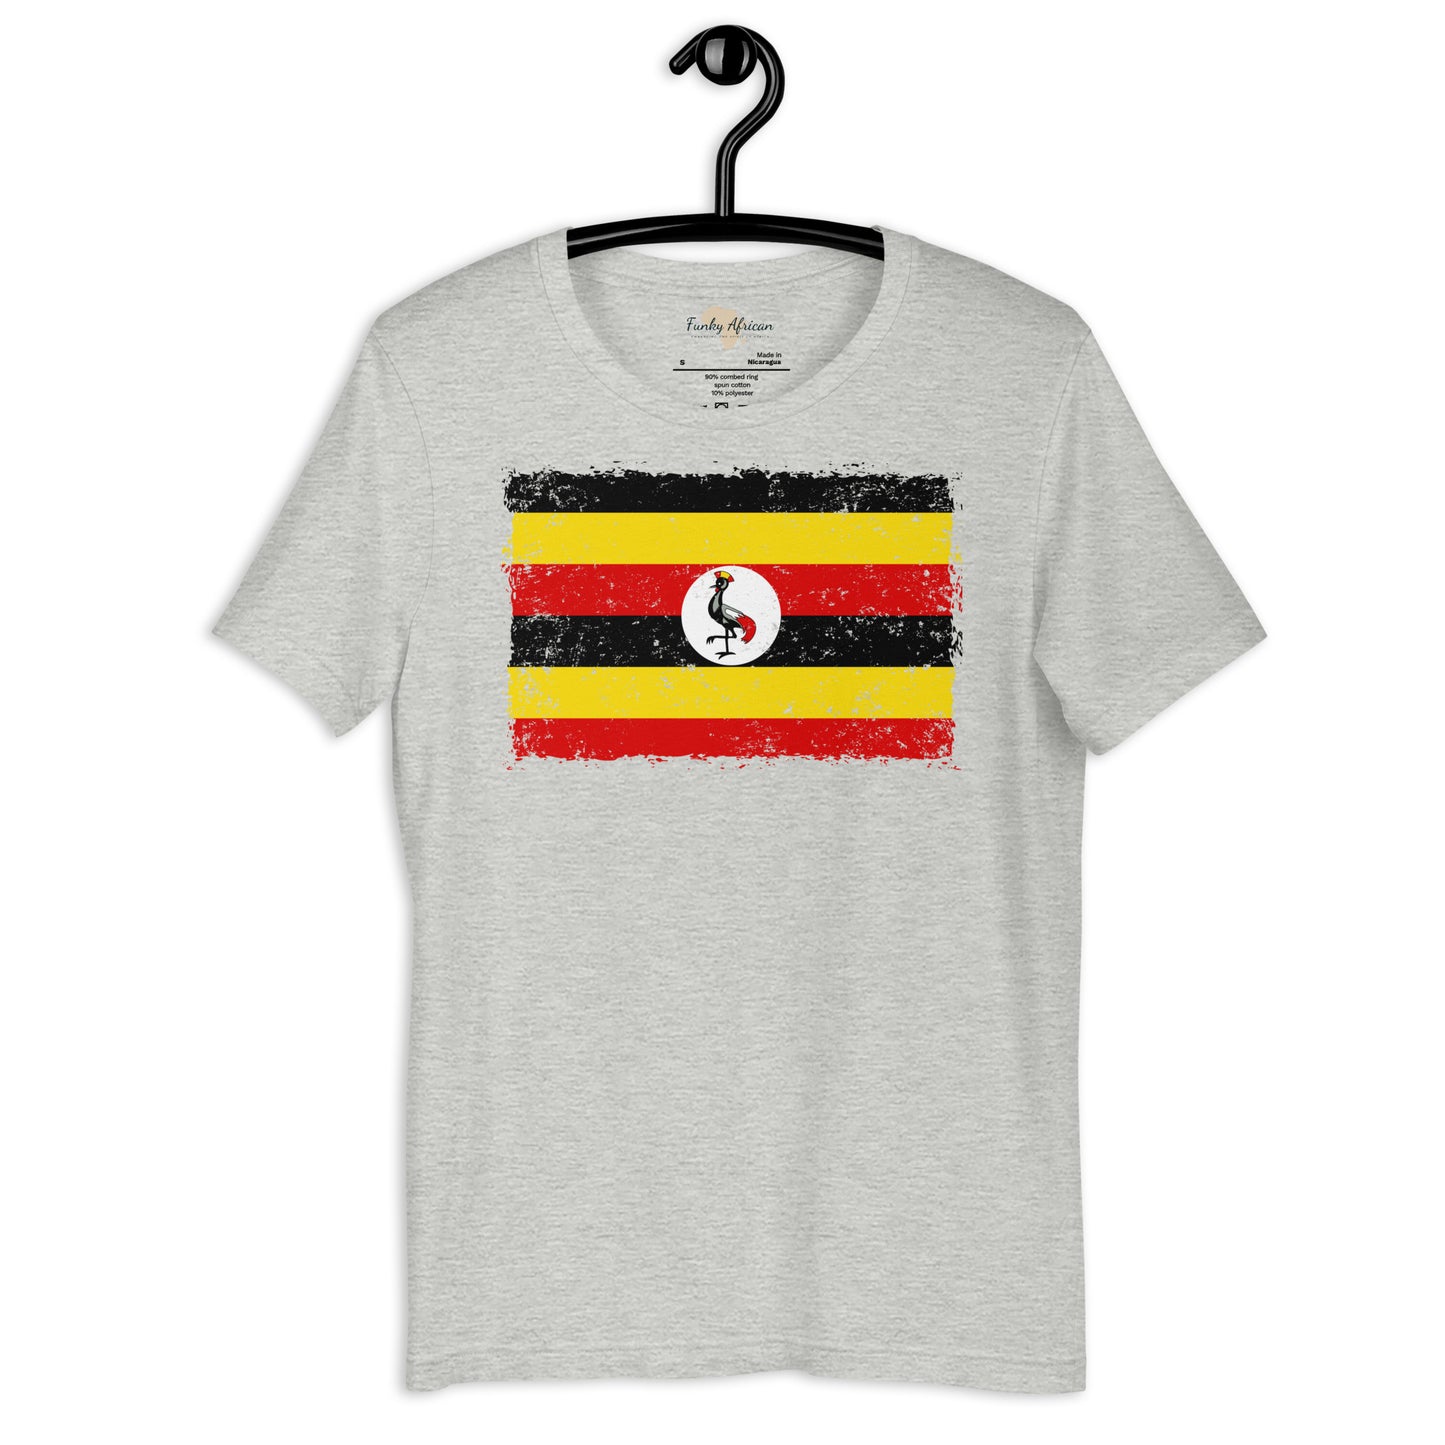 Uganda grunge unisex tee